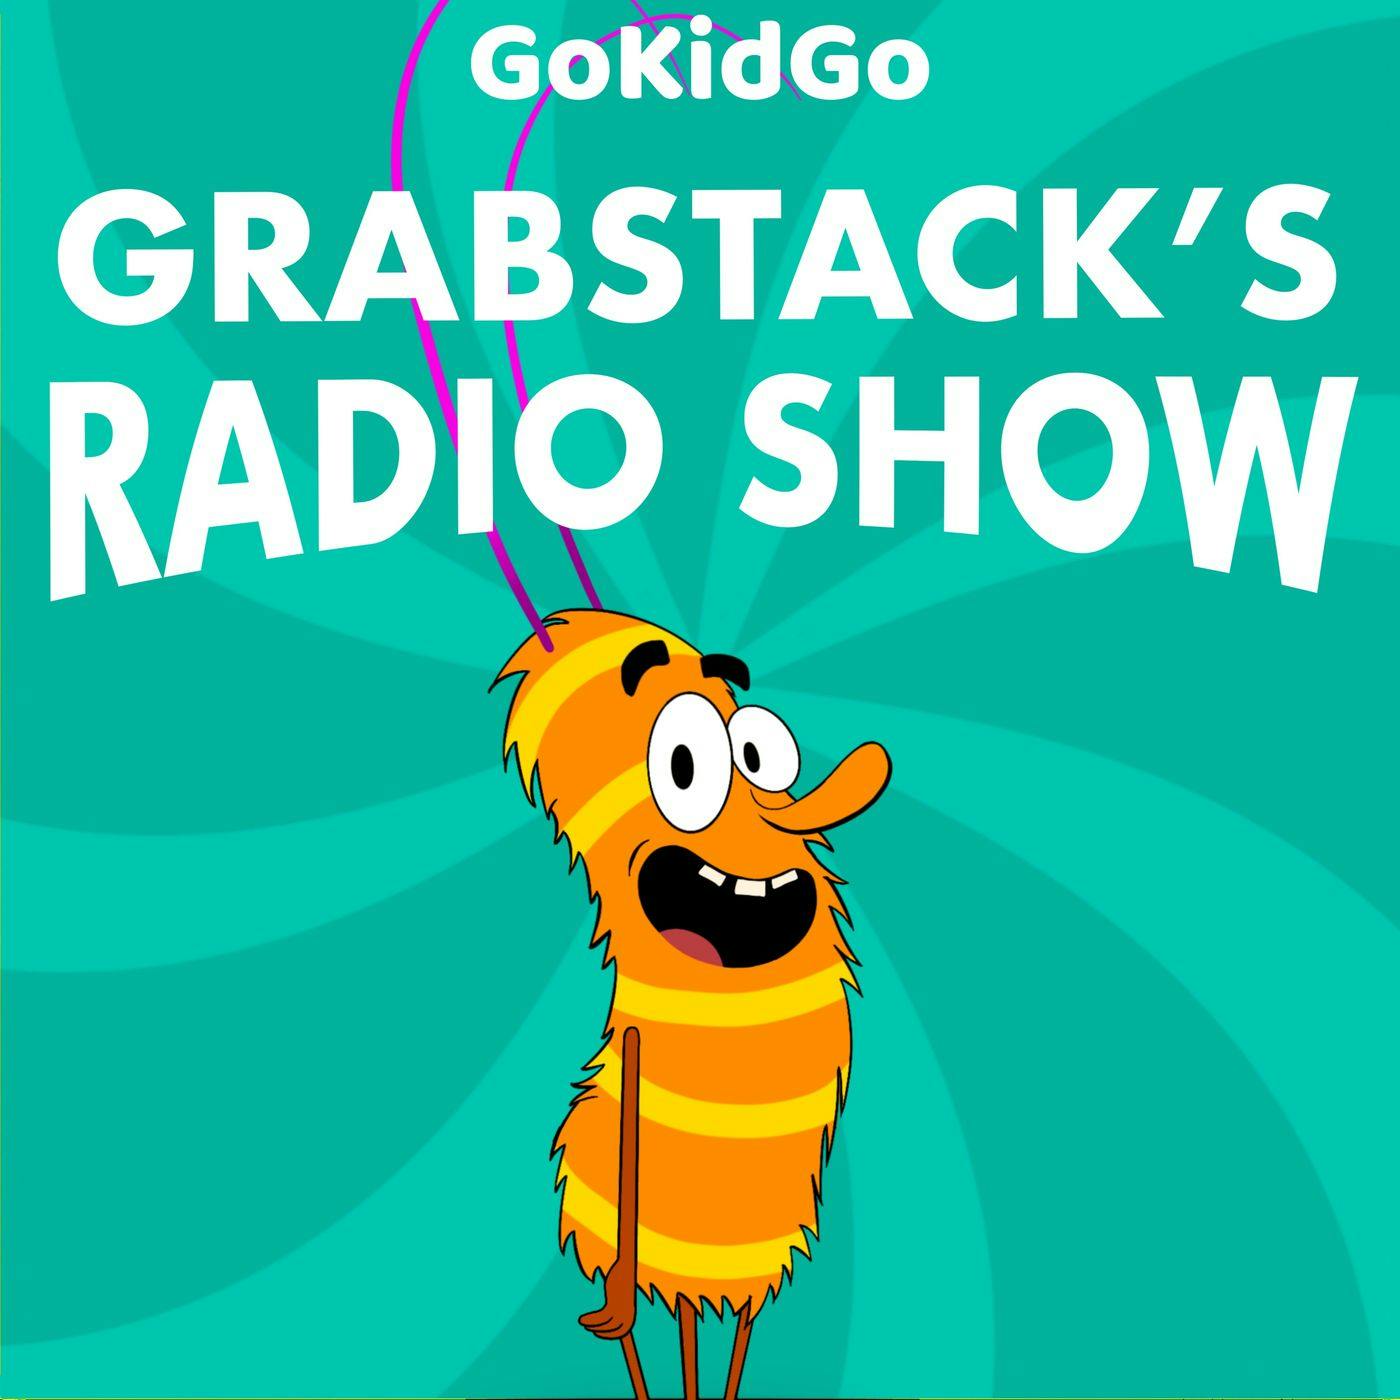 S1E4 - Grabstack Radio Show: Listener Mailbag